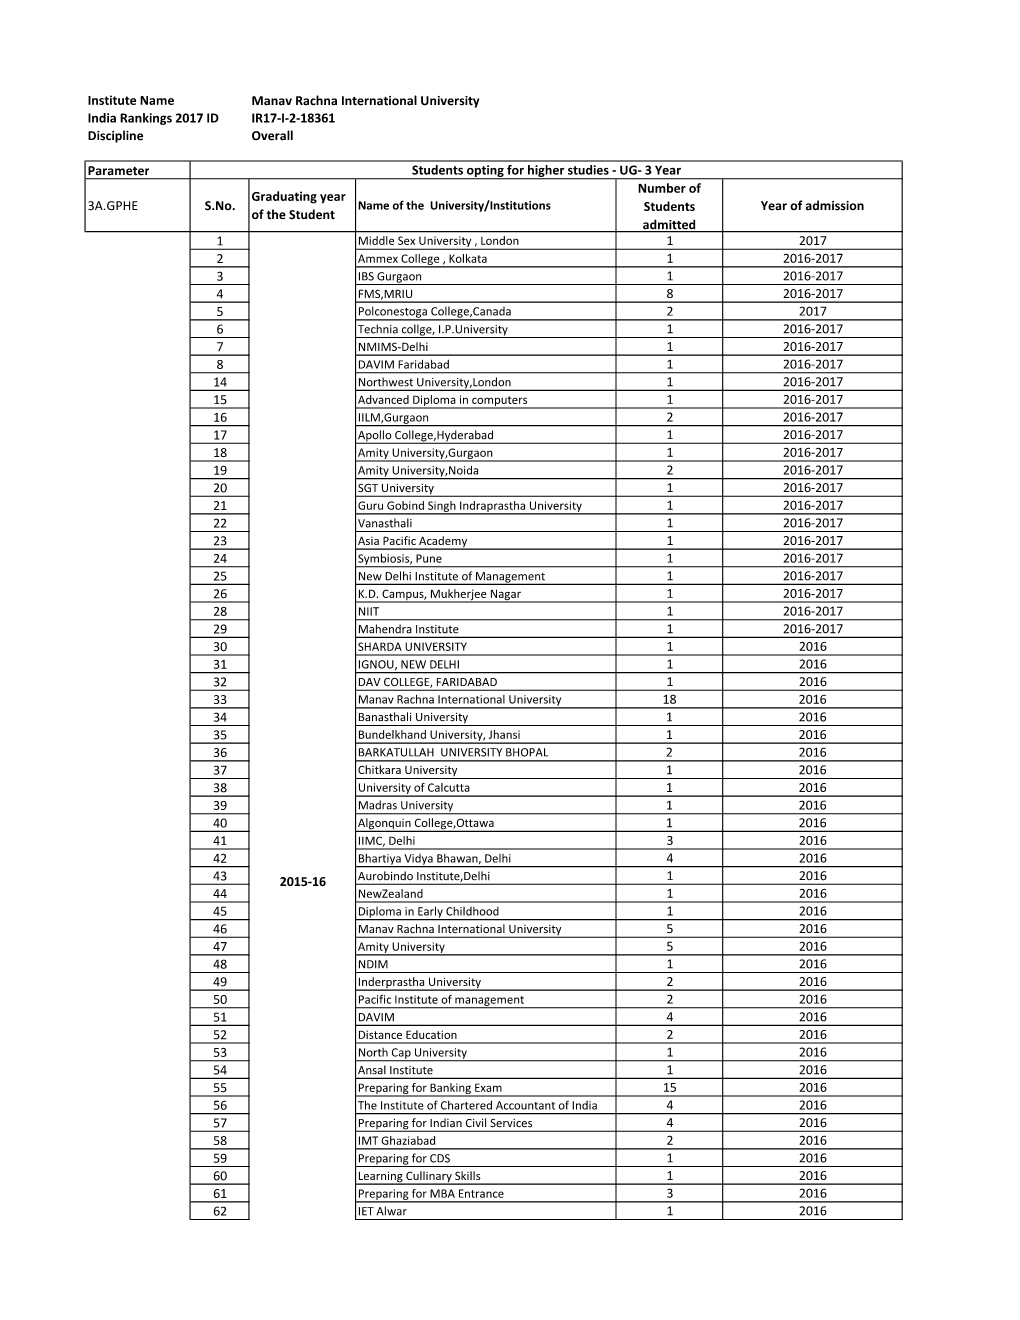 Manav Rachna International University India Rankings 2017 ID IR17-I-2-18361 Discipline Overall